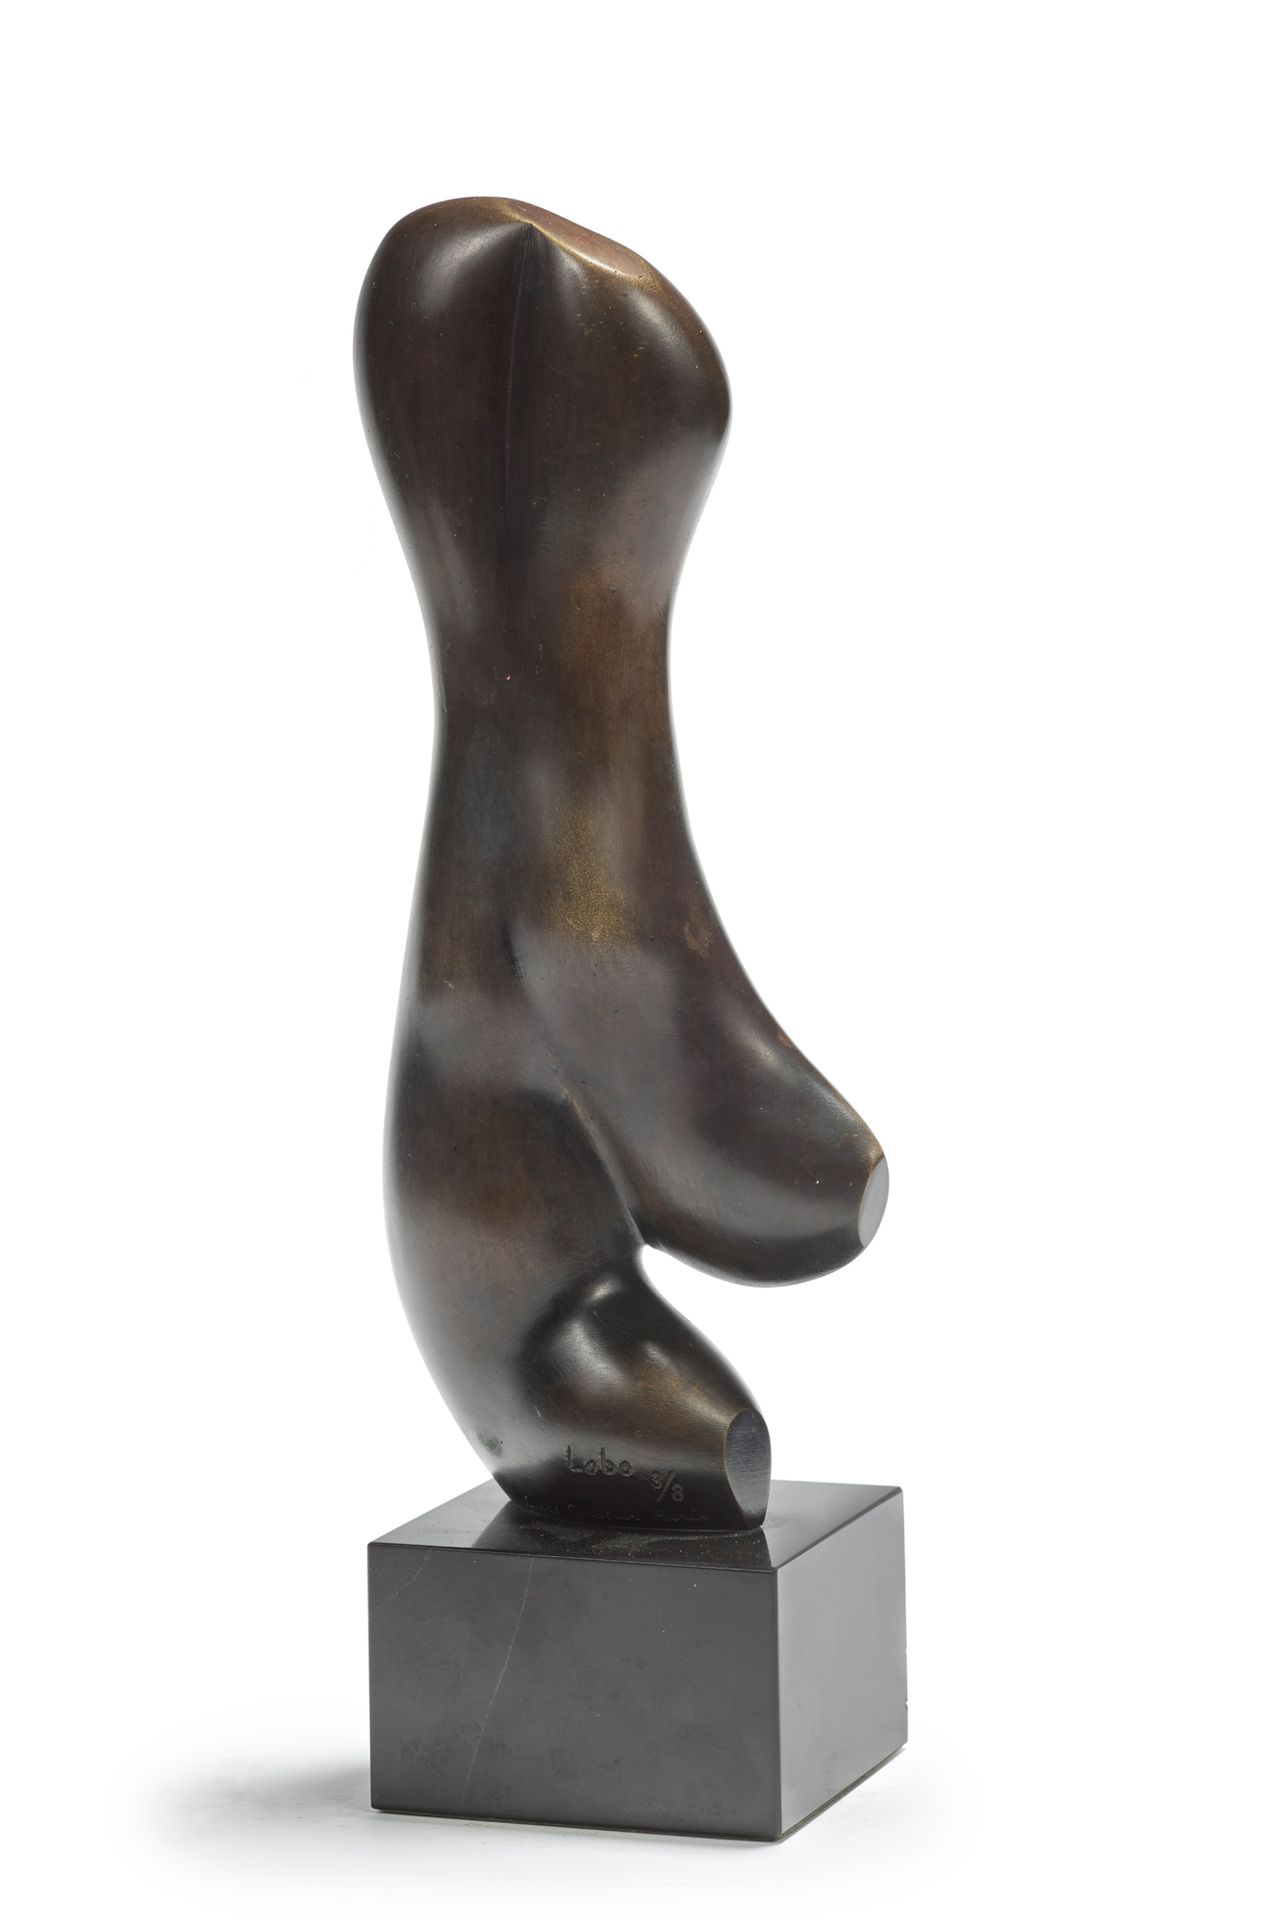 Baltasar LOBO (1910-1993) 
Elan
棕色铜质雕塑，置于黑色大理石的四角形底座上
签名 "Lobo"，编号 "3/8"
Susse f&hellip;